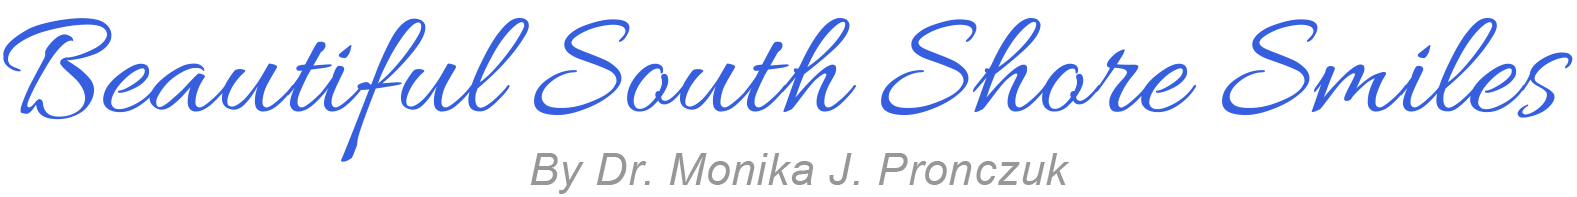 Beautiful South Shore Smiles by Dr. Monika J. Pronczuk logo